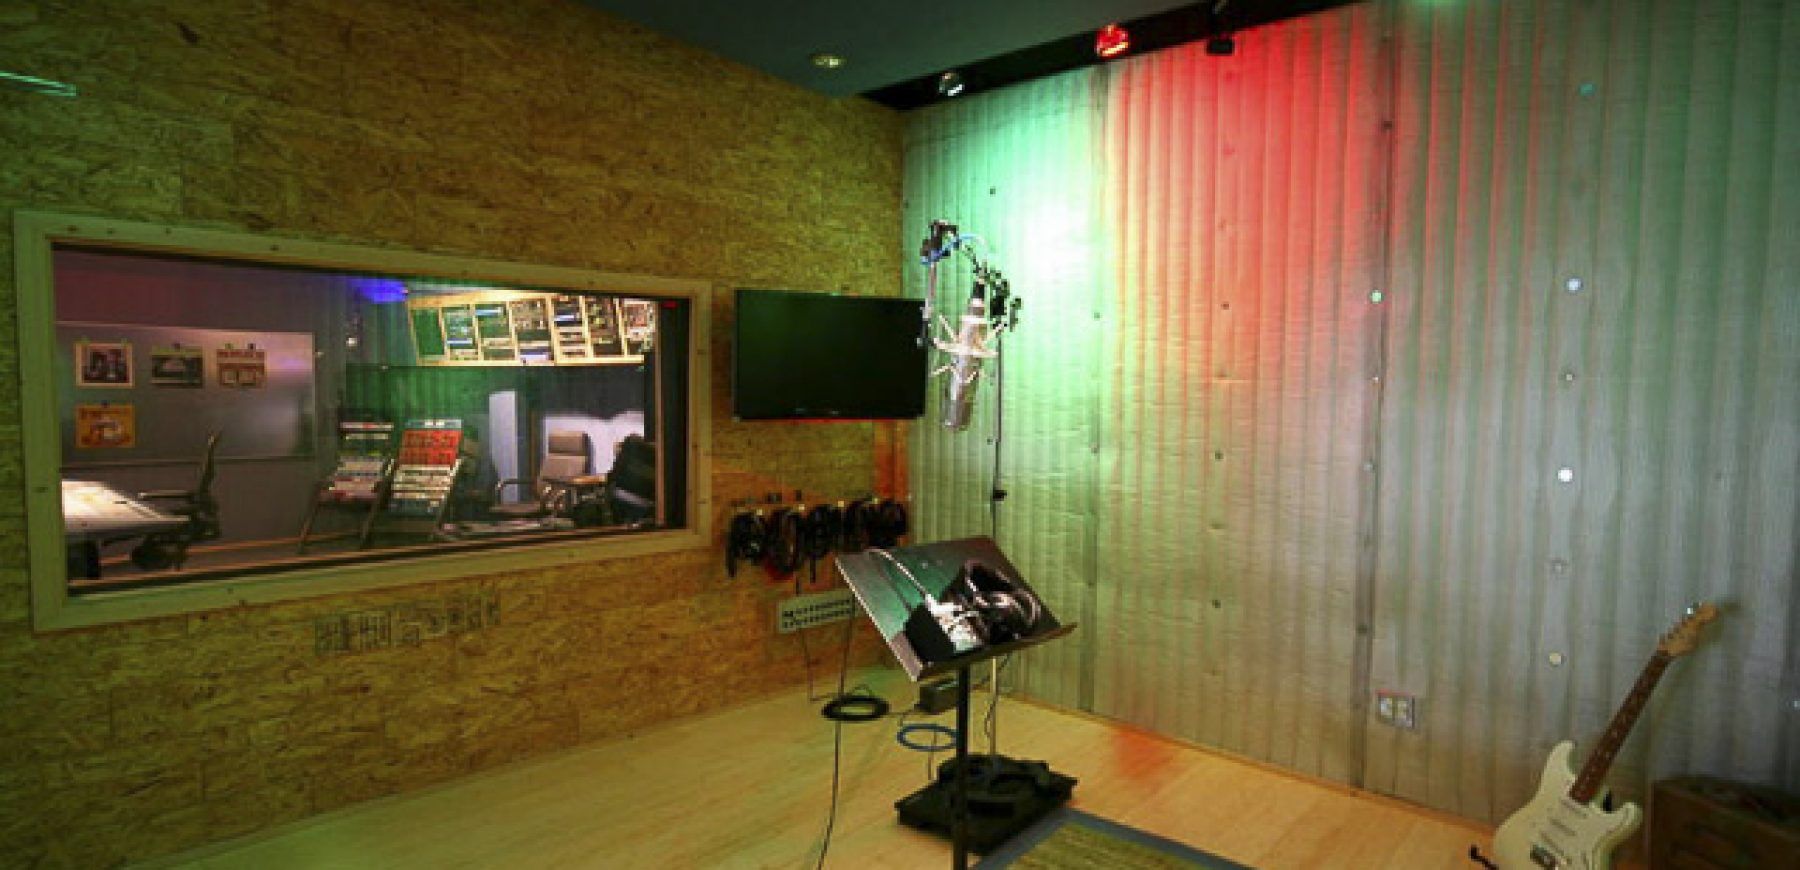 Studio-B-Booth-1a-13